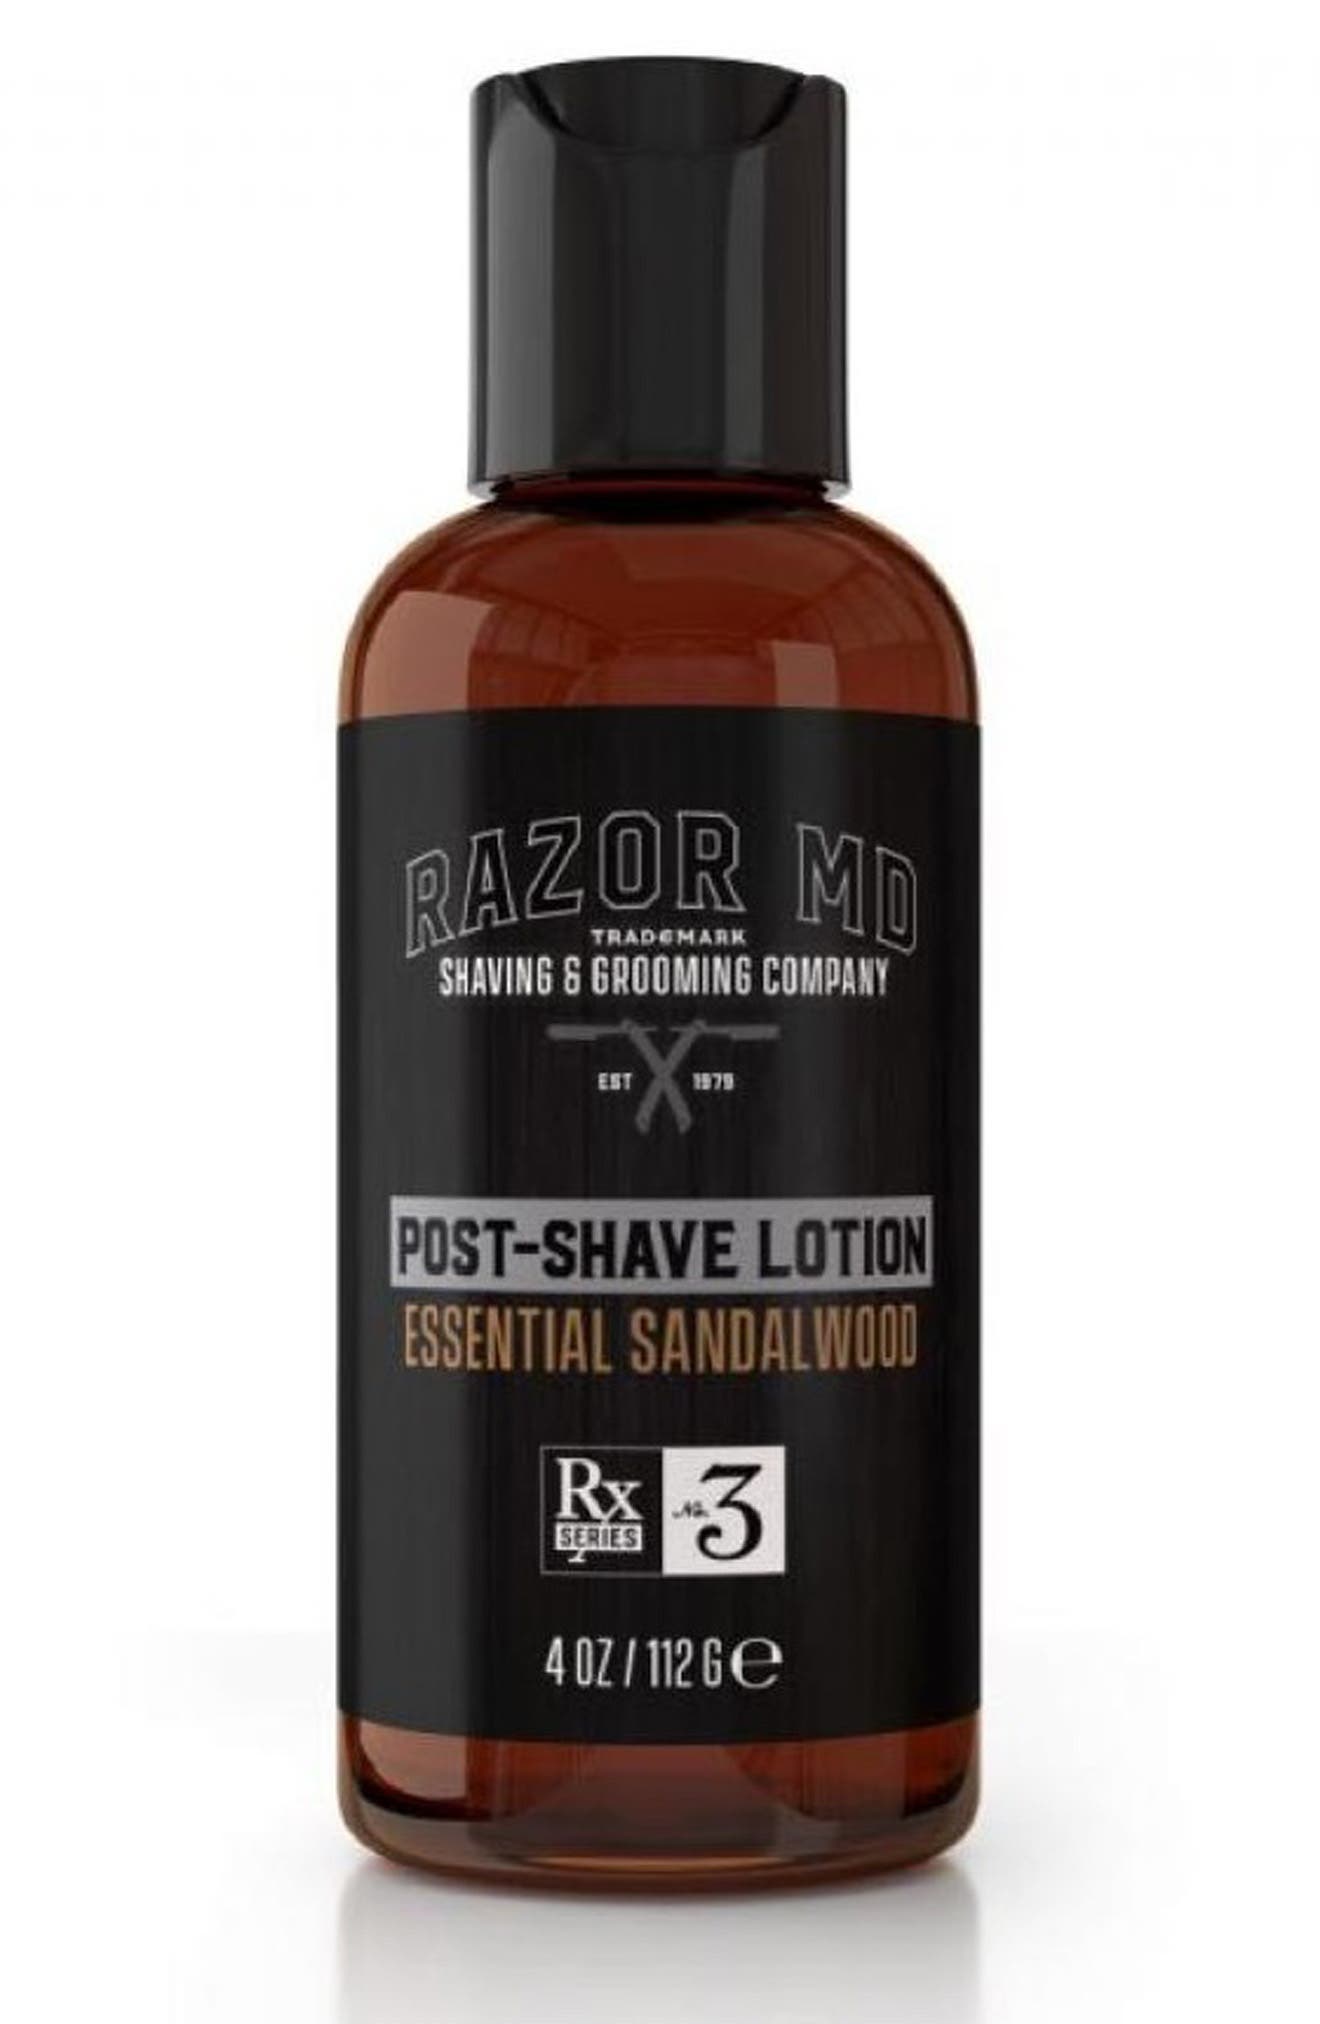 Razor Md Essential Sandalwood Post Shave Lotion